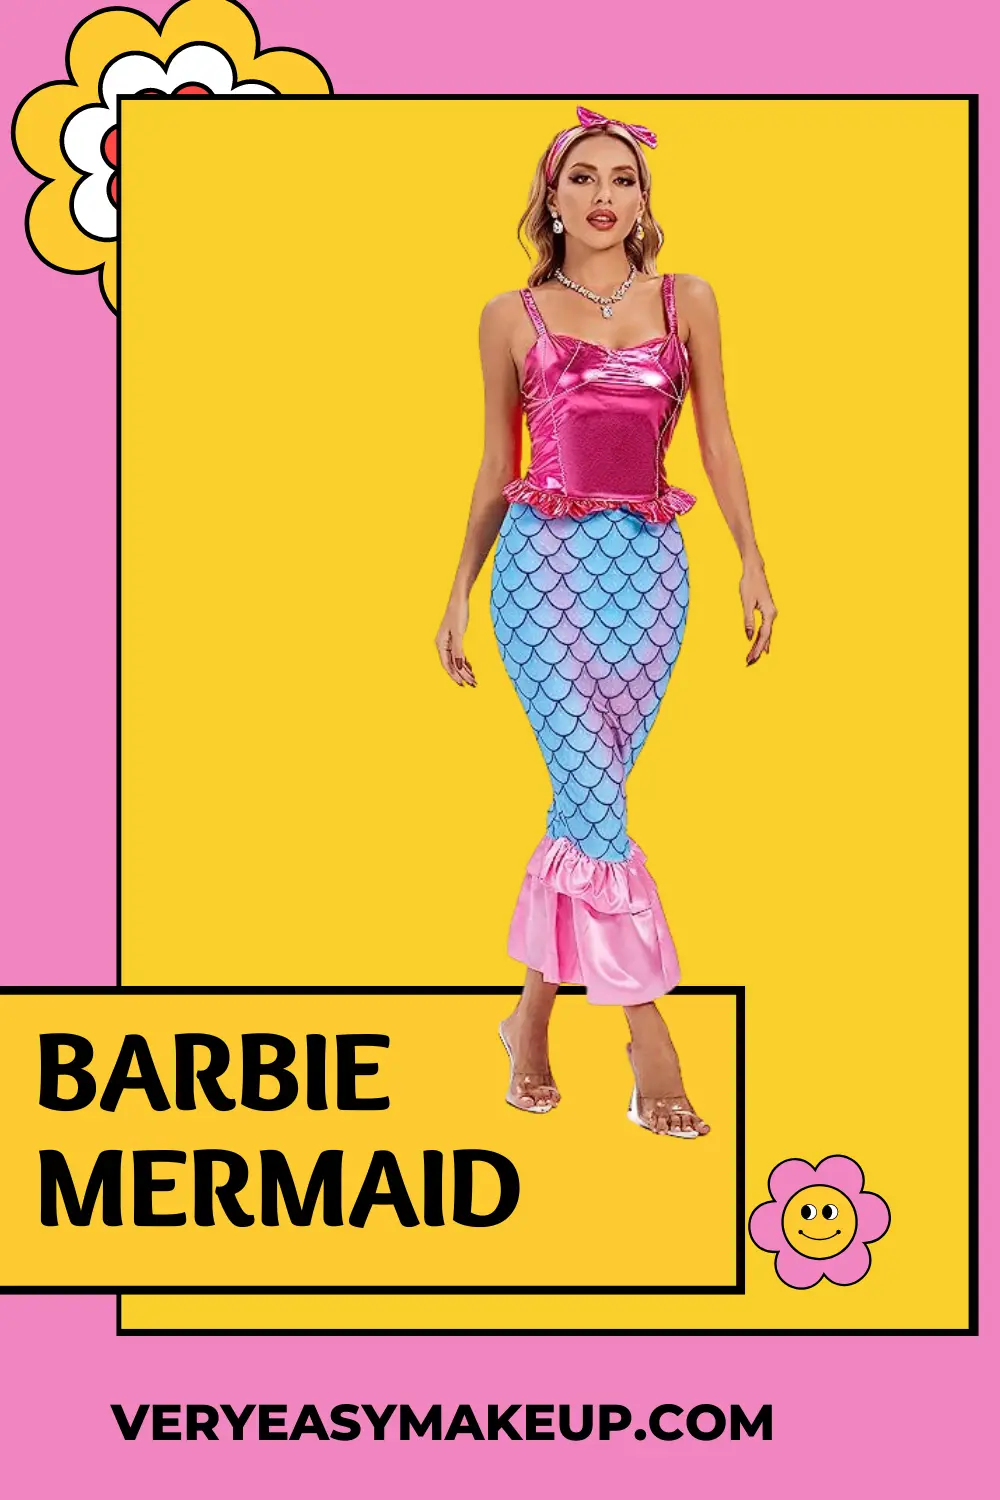 Barbie Mermaid costume